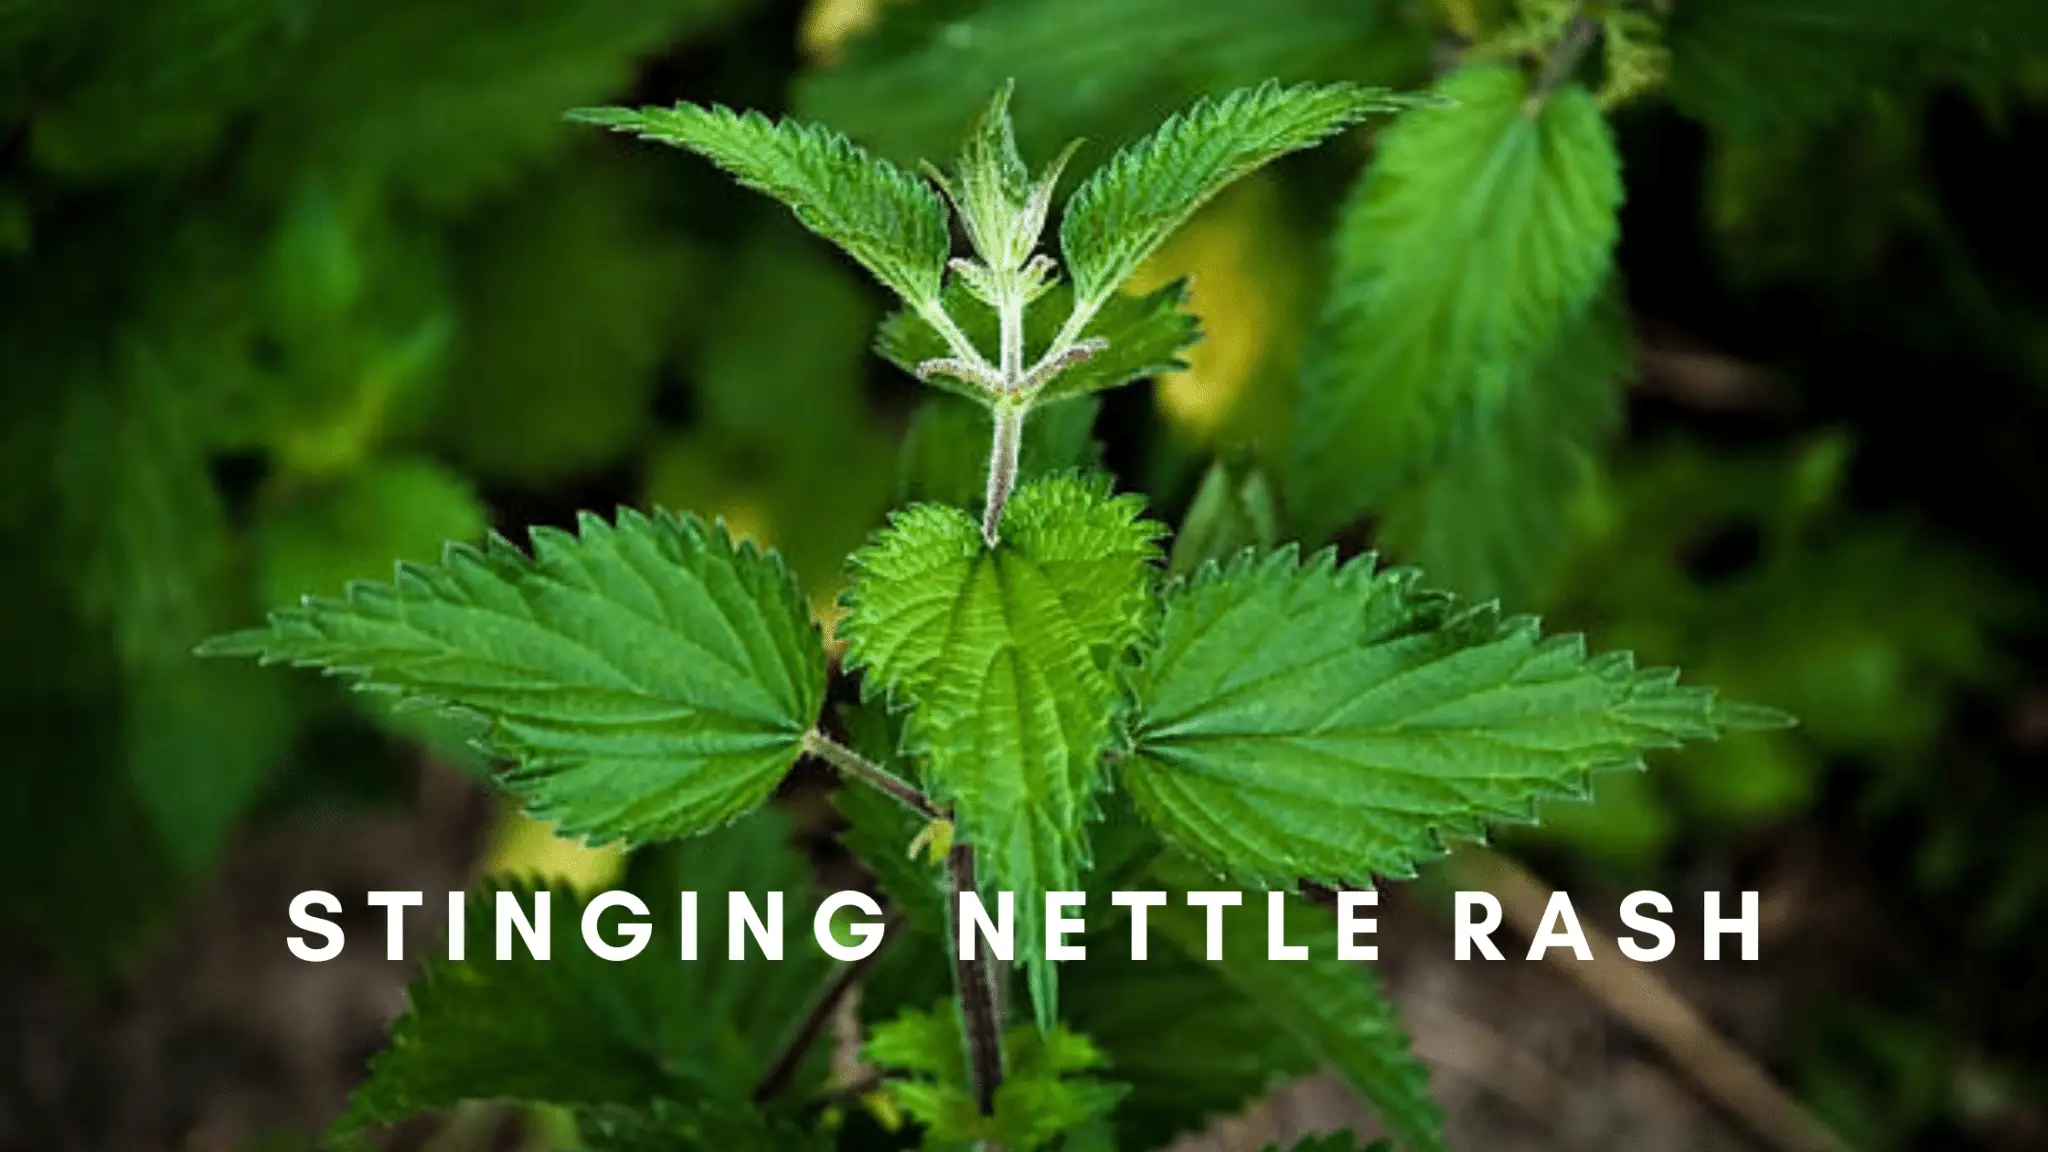 Stinging Nettle Rash – Symptoms, Risks and Treatment